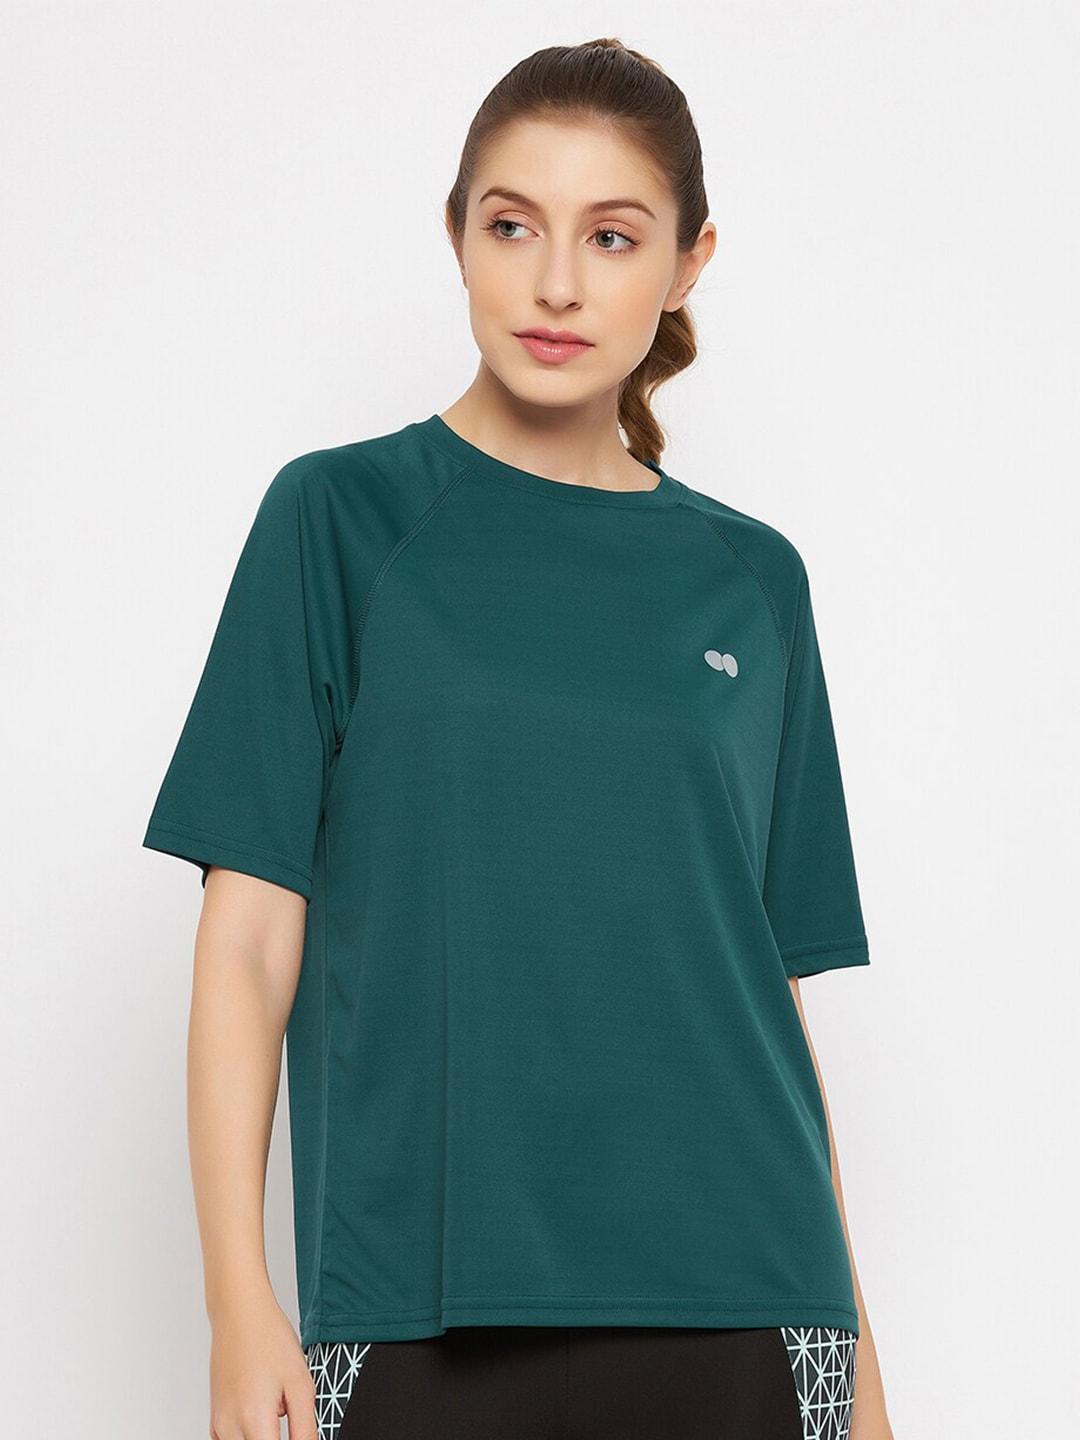 clovia-women-boxy-fit-active-t-shirt